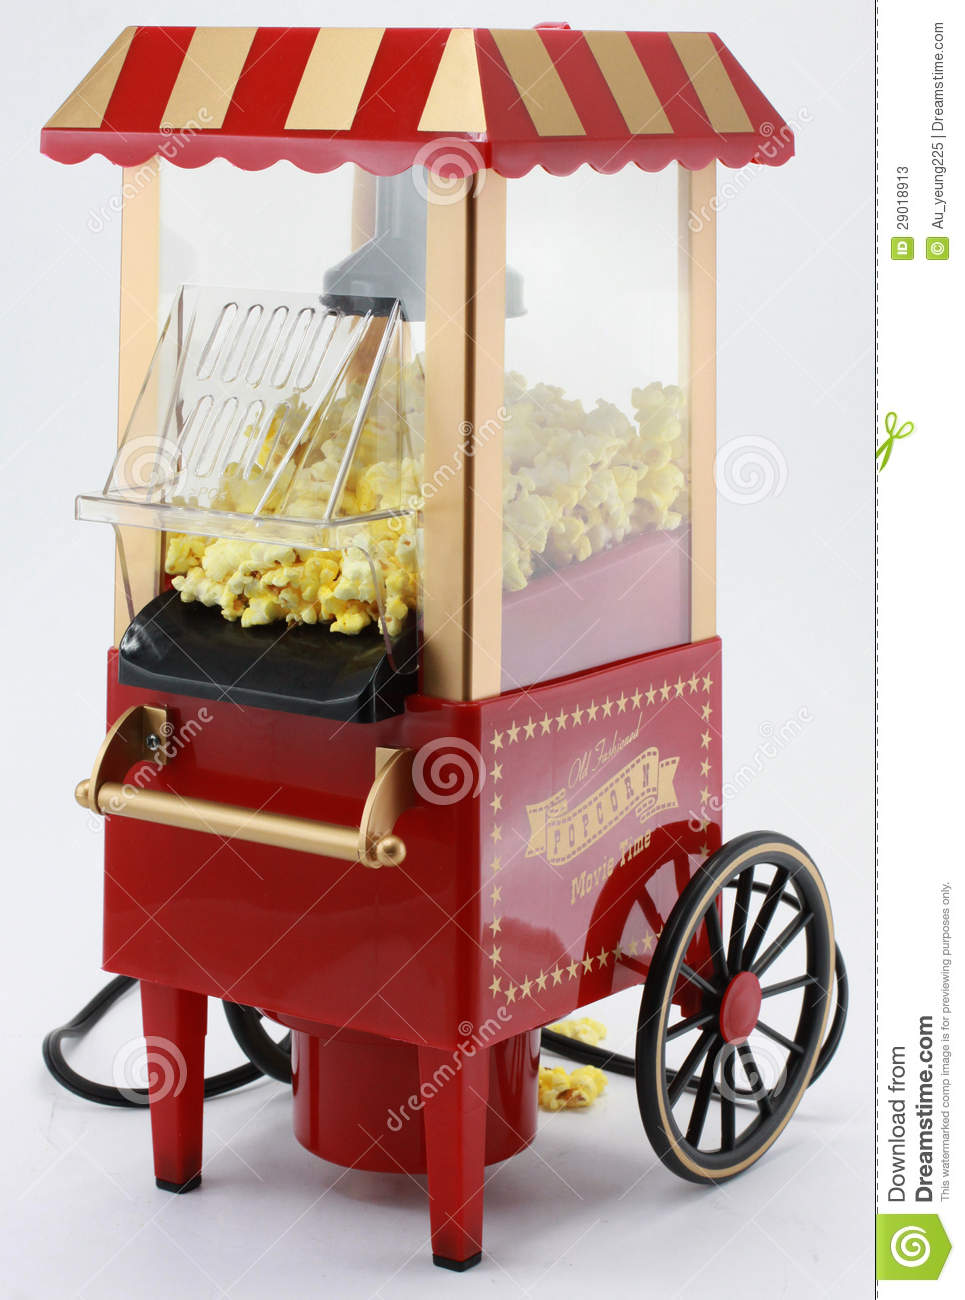 More Similar Stock Images Of   Retro Popcorn Machine